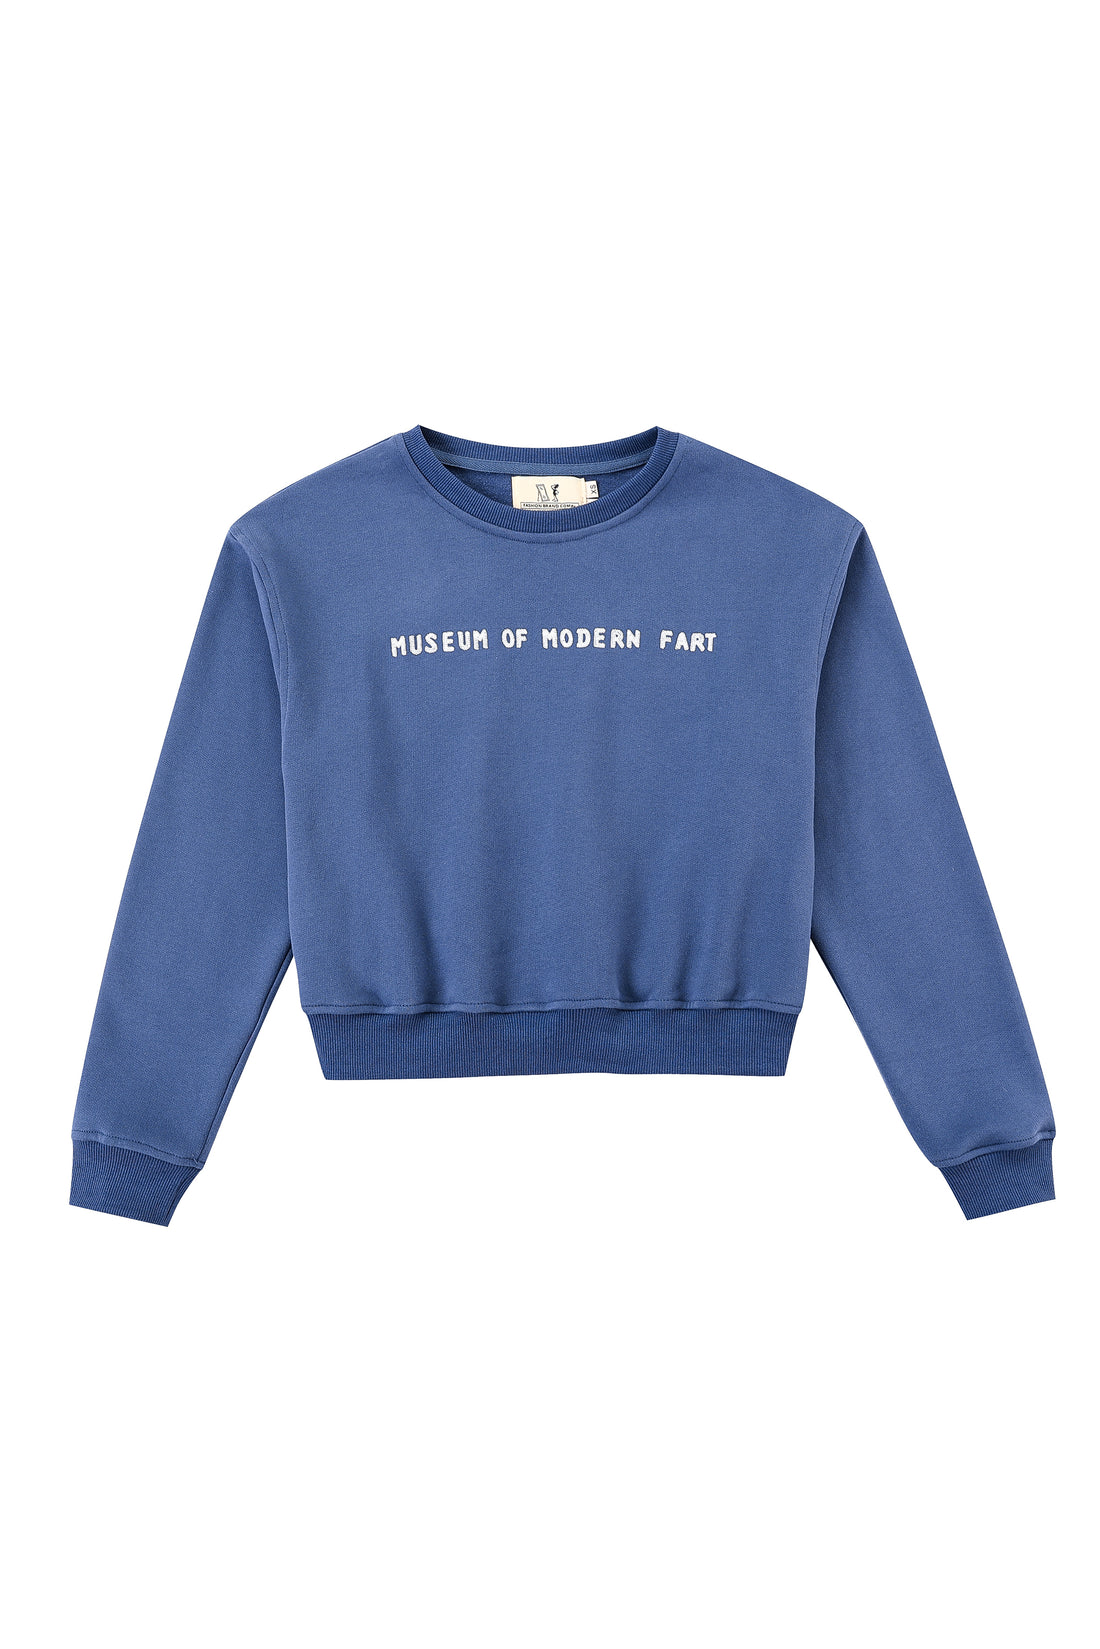 Museum of Modern Fart Sweatshirt – Fashion Brand Company